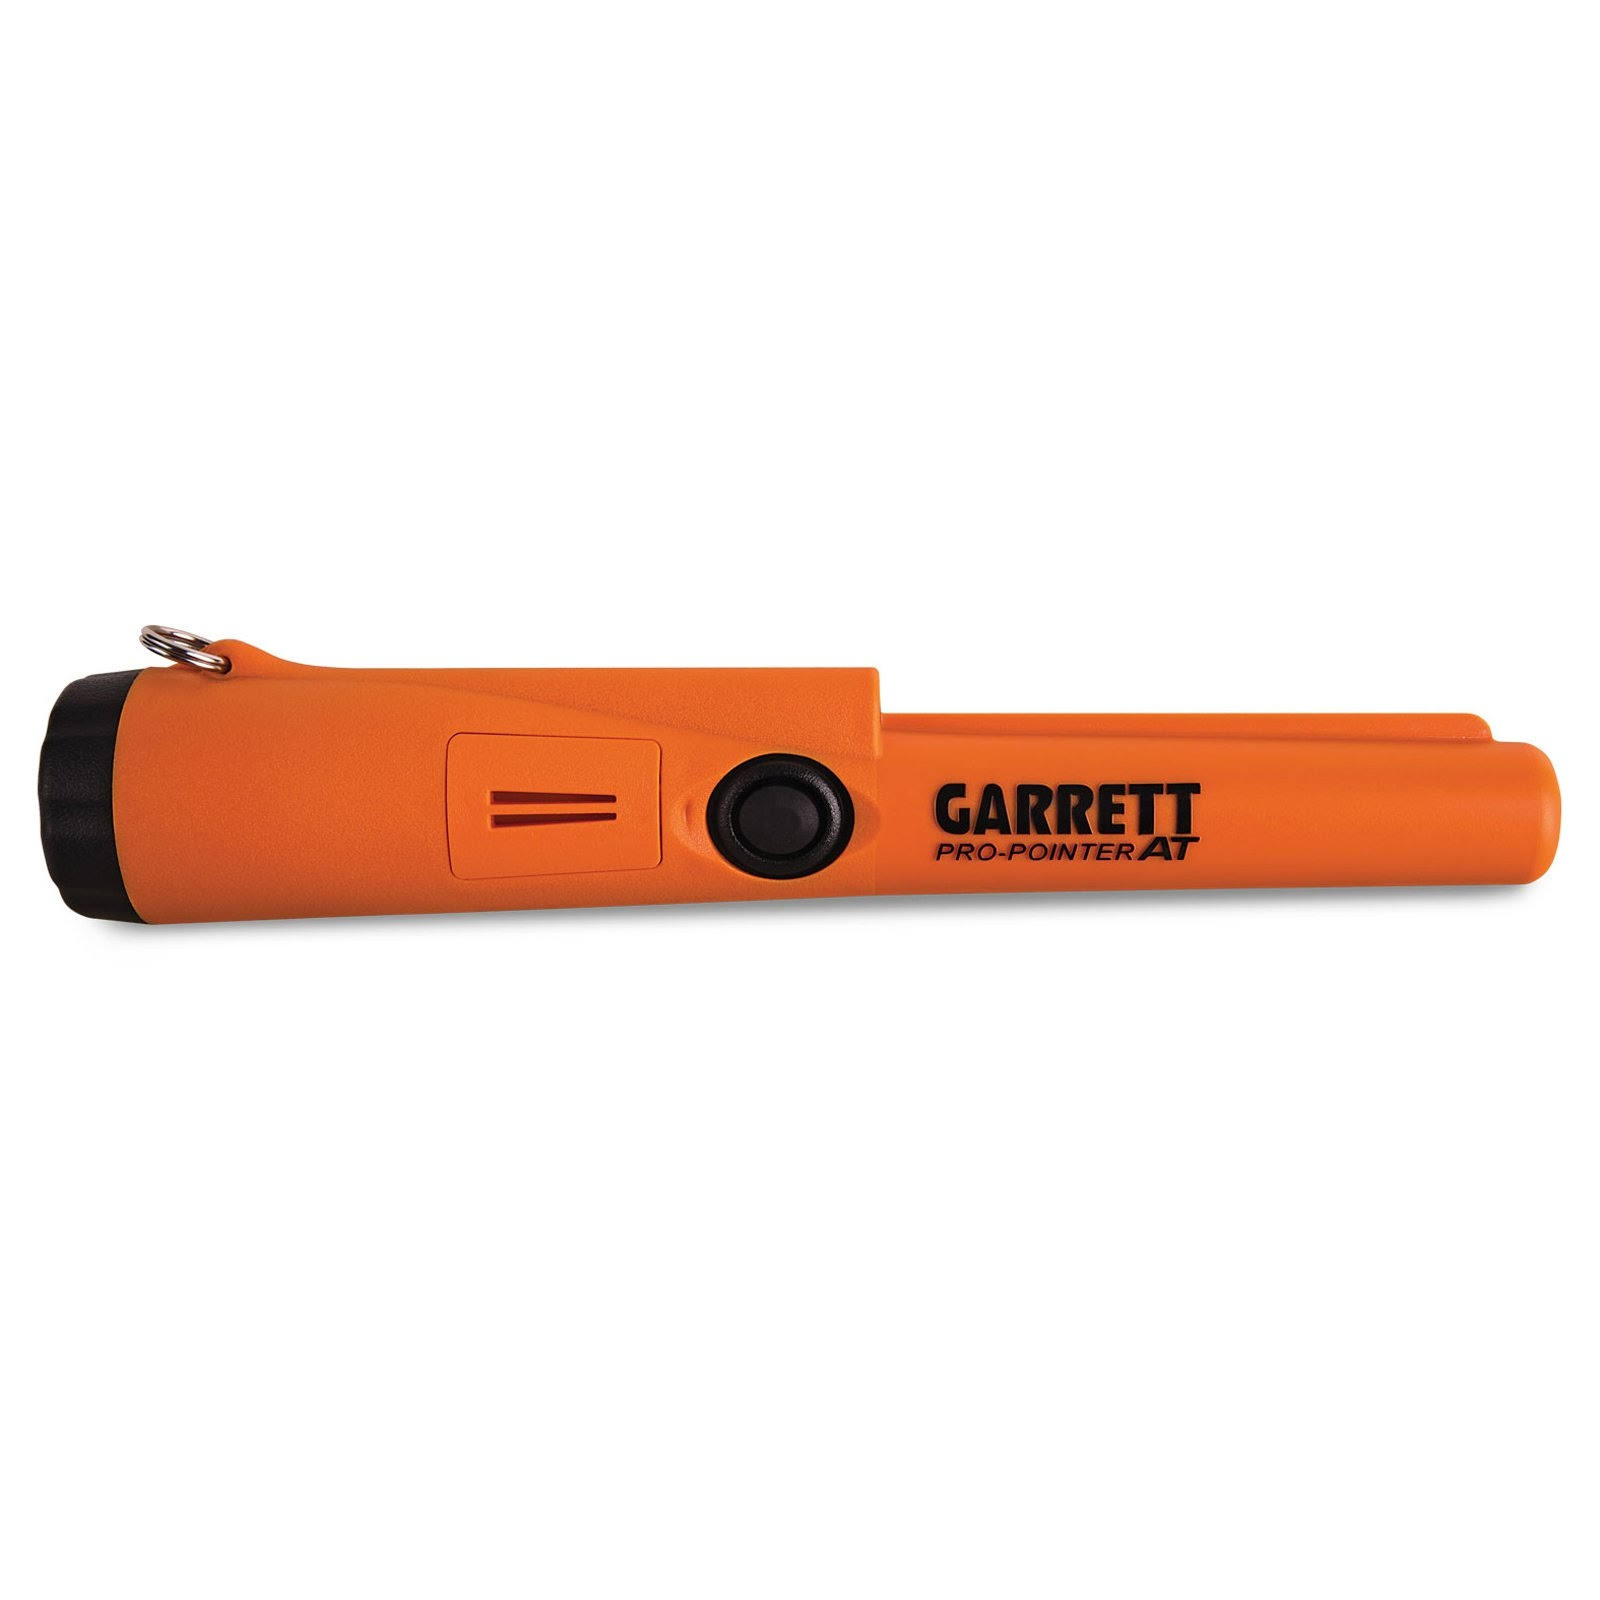 Garrett Pro Pointer At Waterproof Pinpointing Metal Detector - Orange